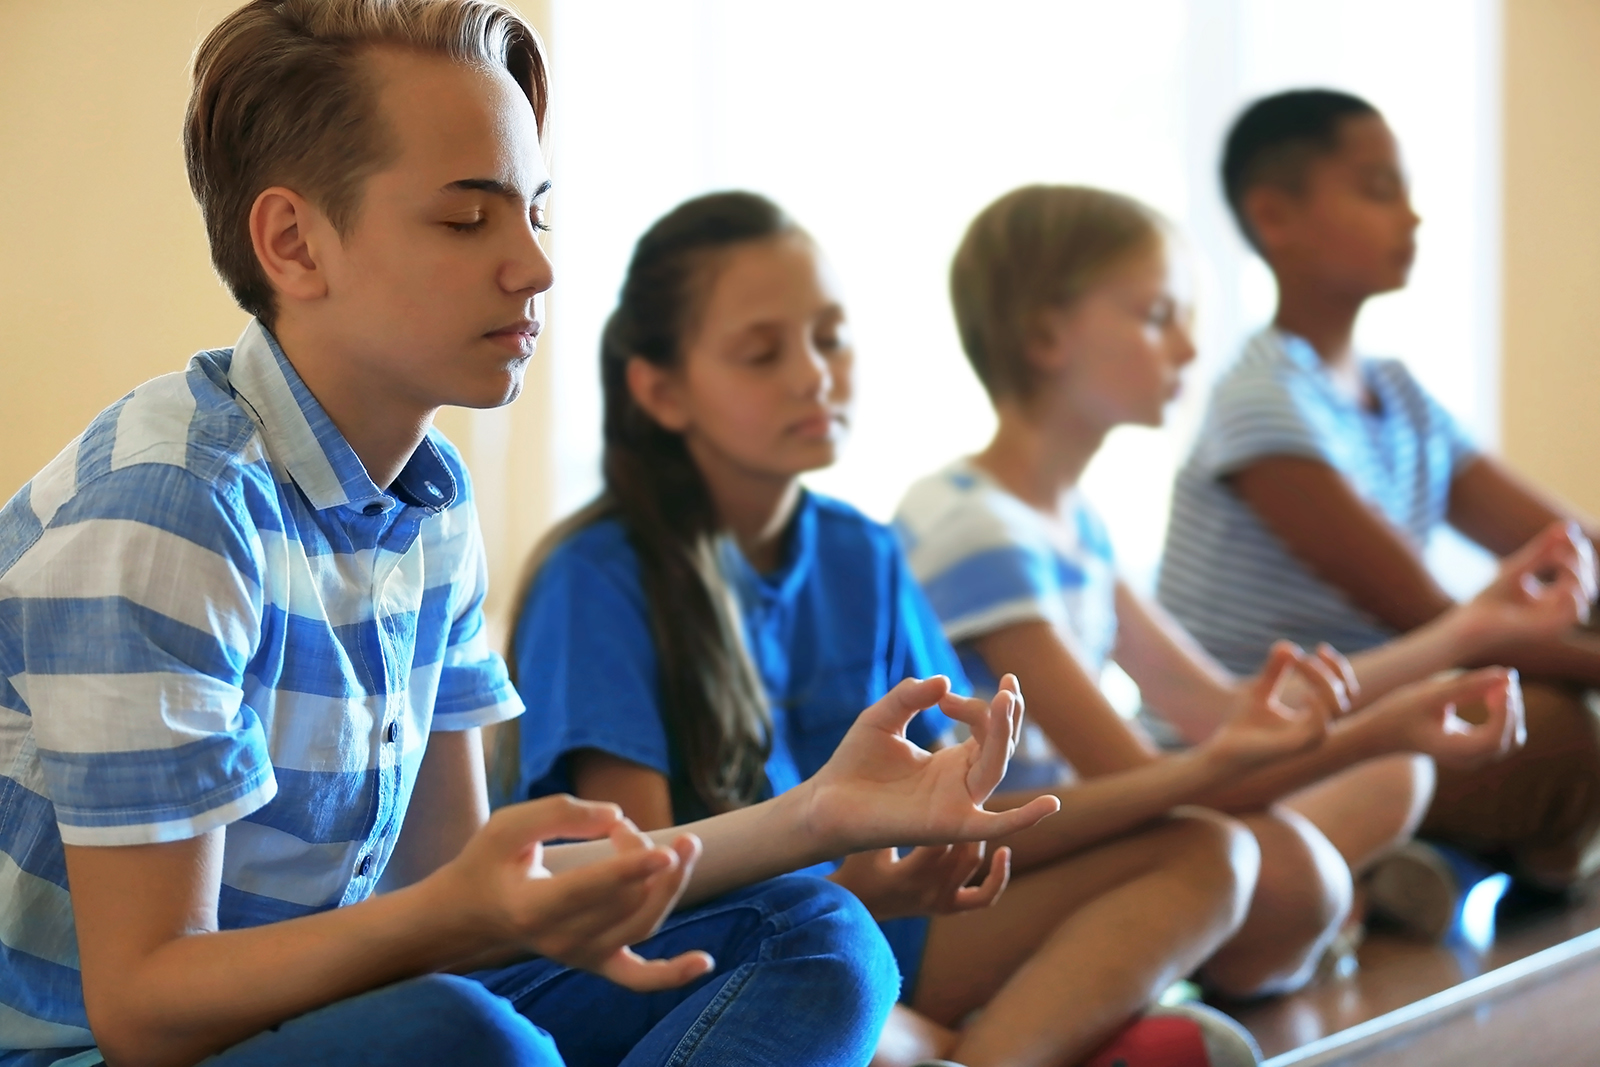 Yoga classes are becoming more prevalent in America’s schools. Africa Studio via www.shutterstock.com